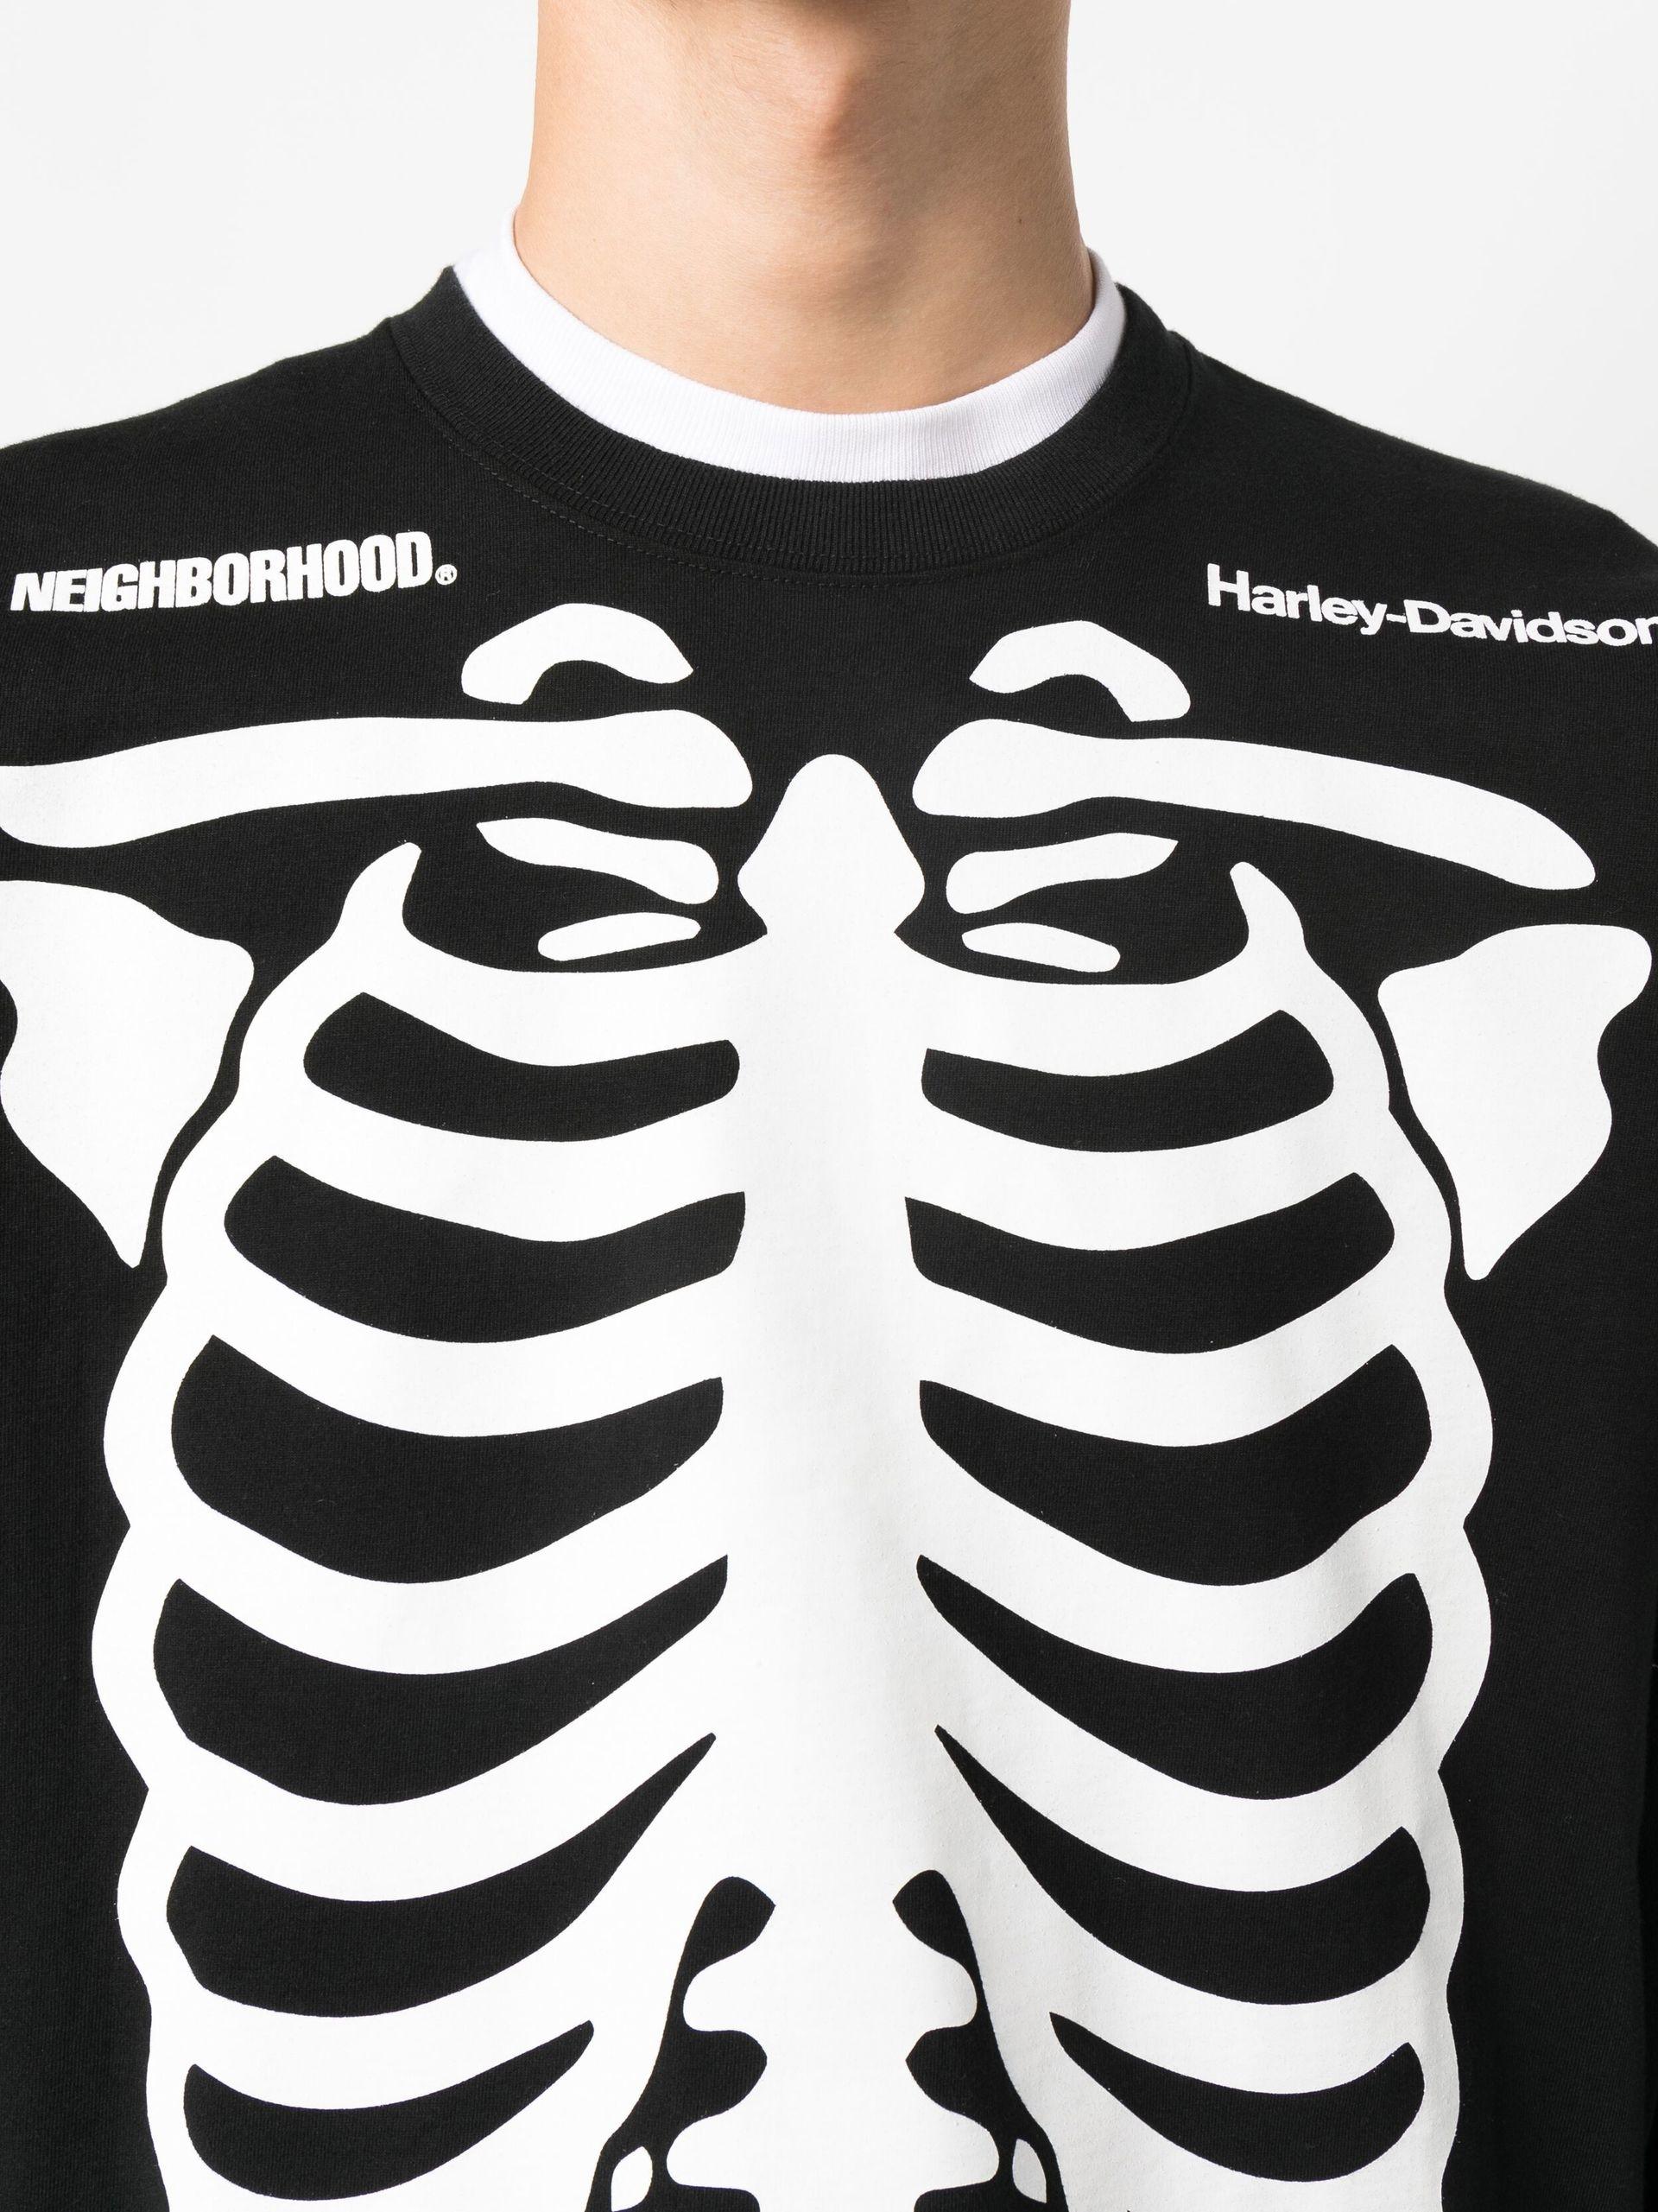 Neighborhood X Harley Davidson Long-sleeve T-shirt in Black for 